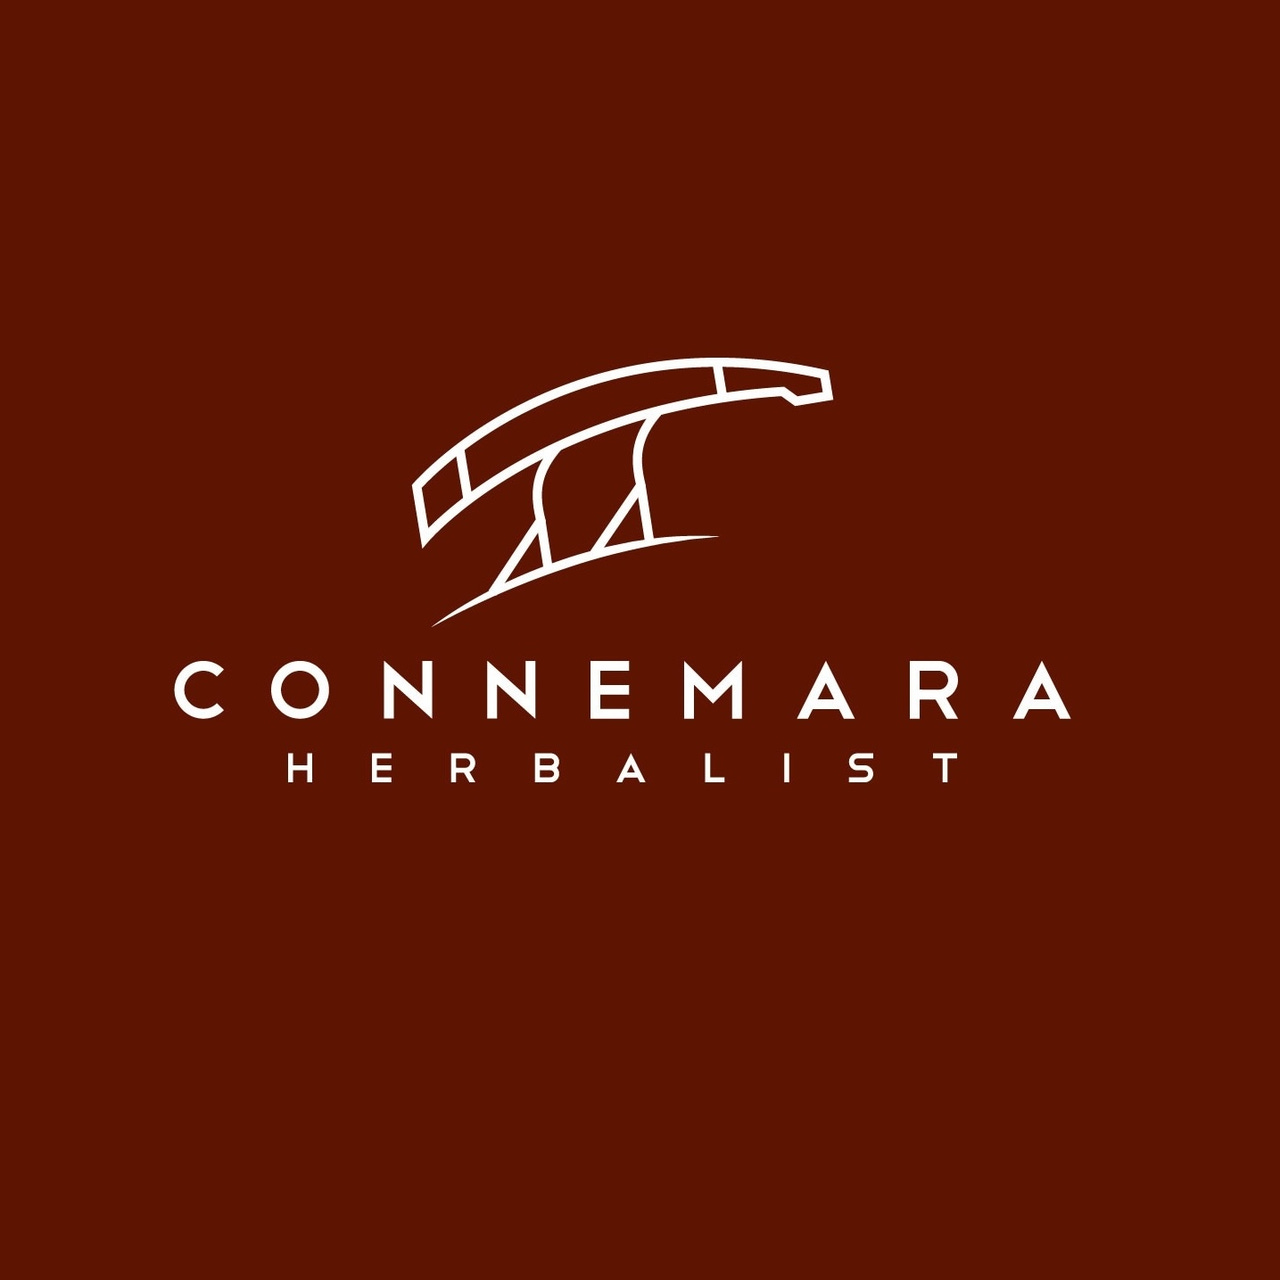 Artwork for Connemara Herbalist